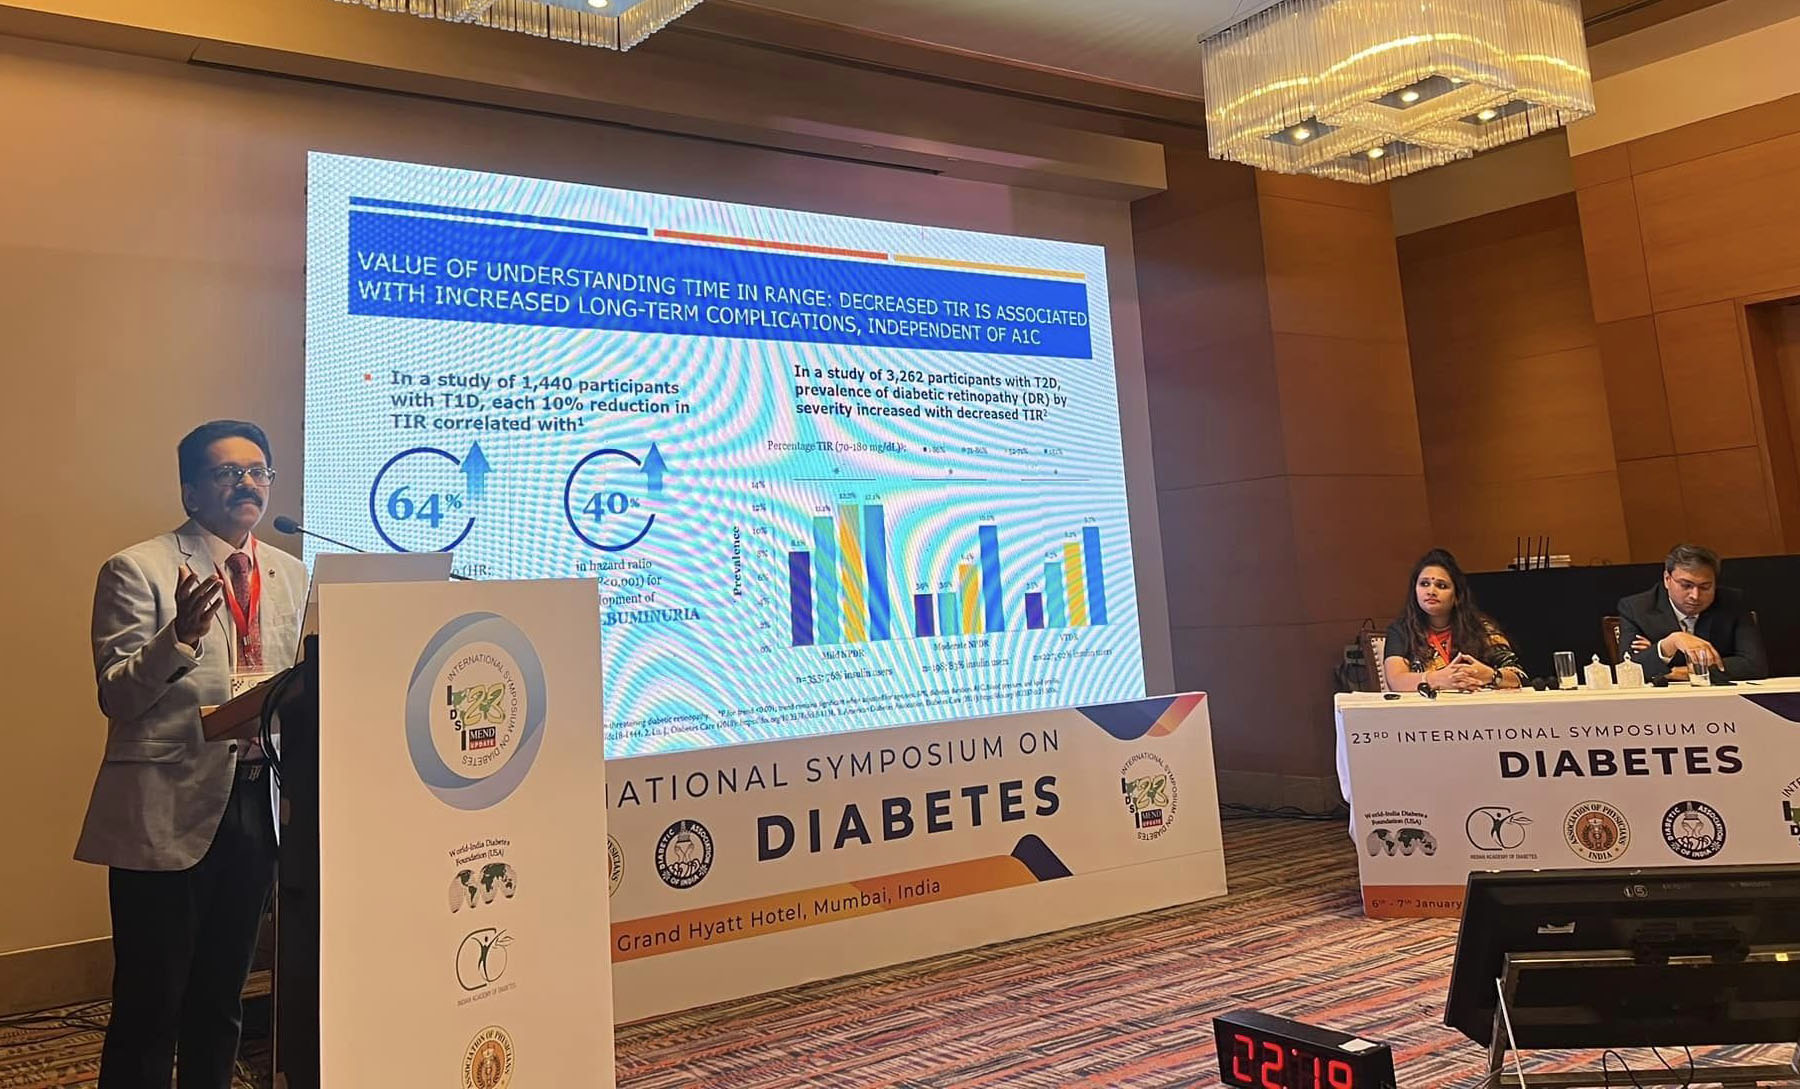 23rd International Symposium on Diabetes